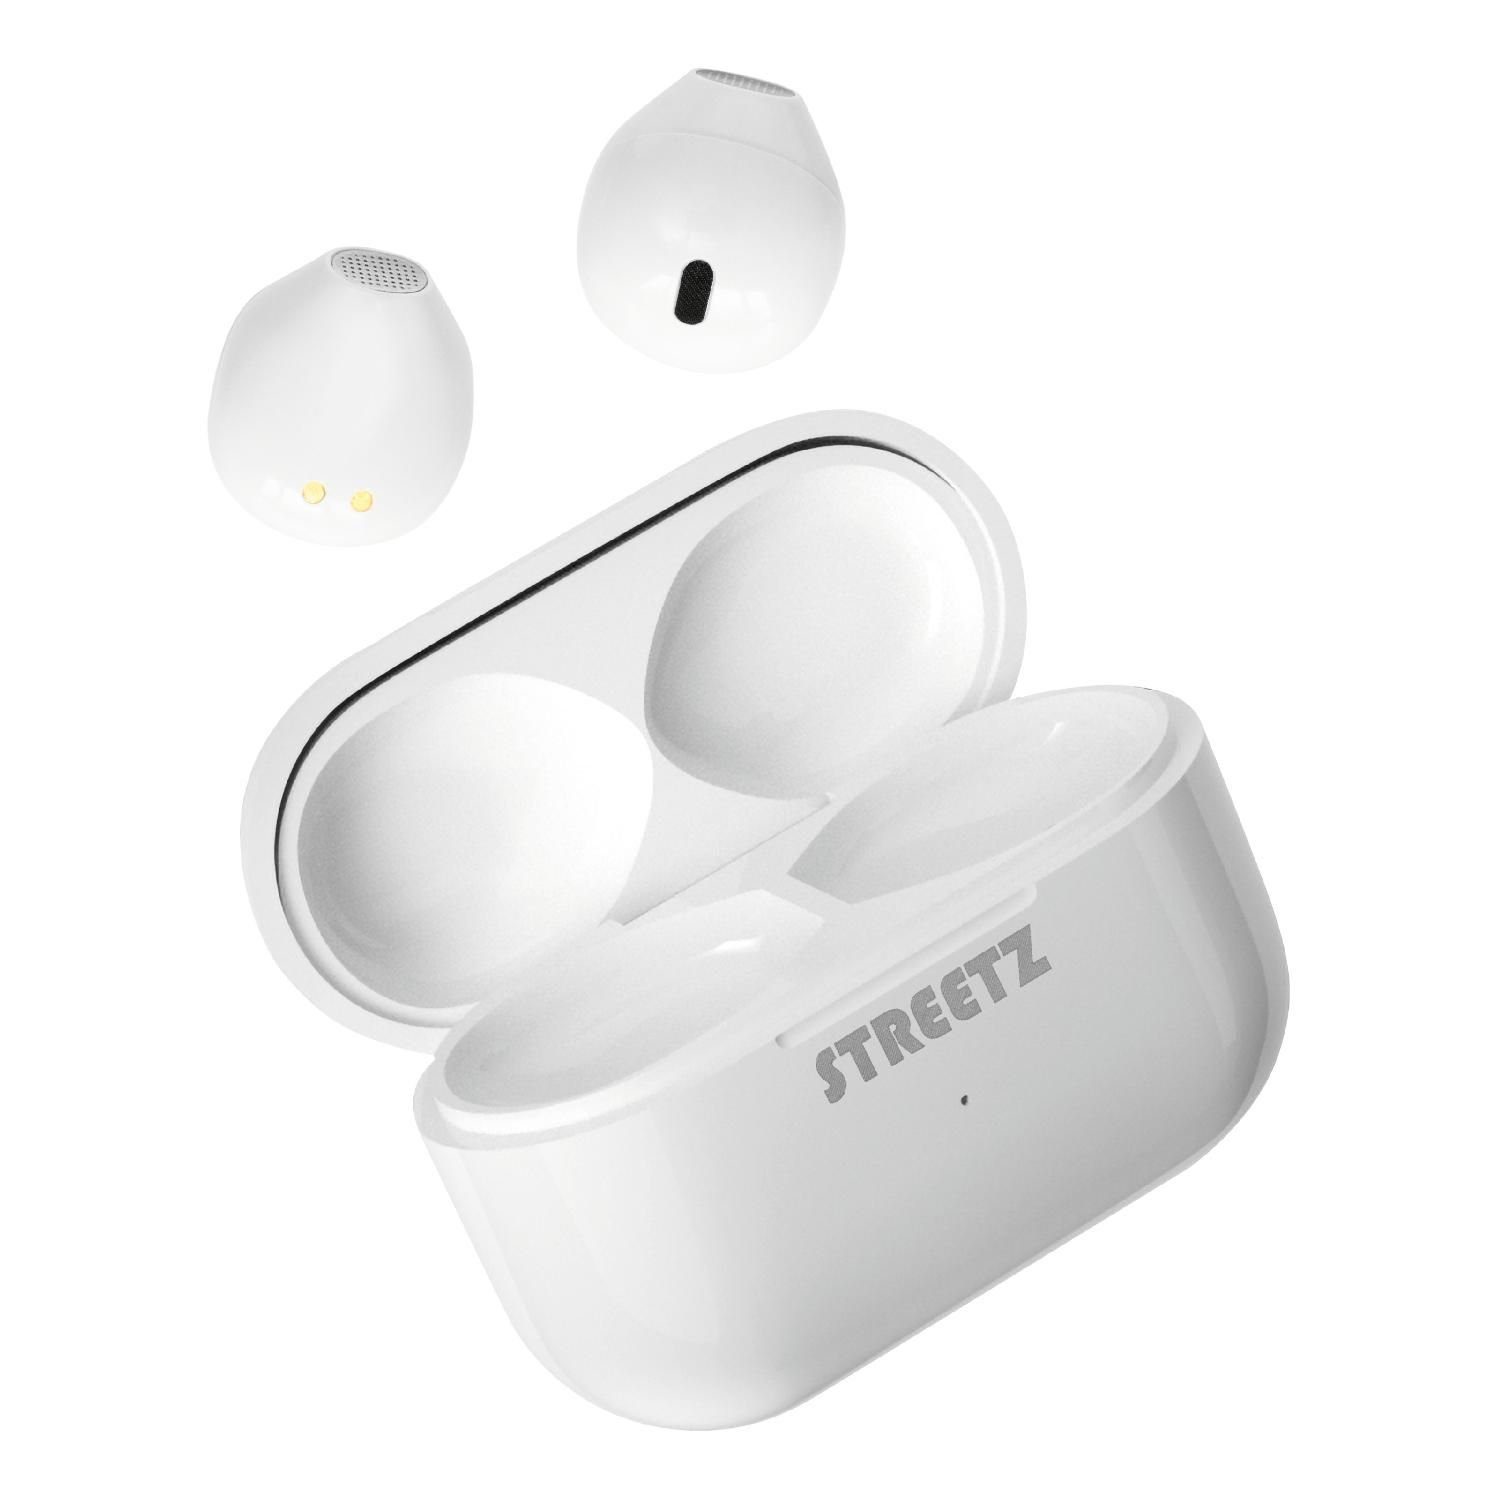 Jahre Kopfhörer Kopfhörer In-Ear keine, STREETZ Mini Bluetooth (integriertes Bluetooth, Li-Ion-Akku inkl. TWS Mikrofon, Herstellergarantie) 5